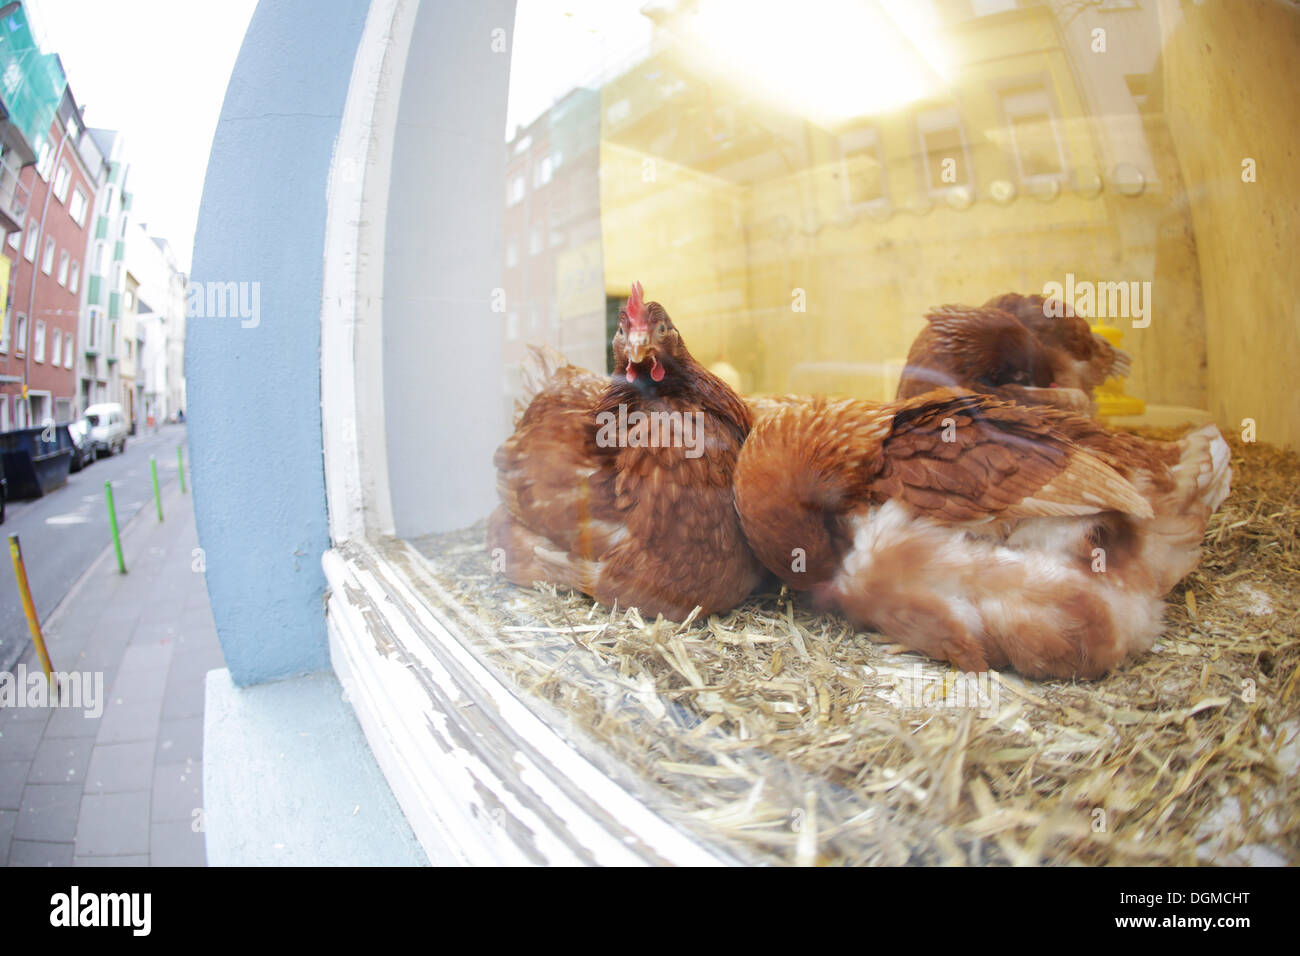 Chickens in a shop display window, Ehrenfeld, Cologne, Rhineland, North Rhine-Westphalia, Germany Stock Photo